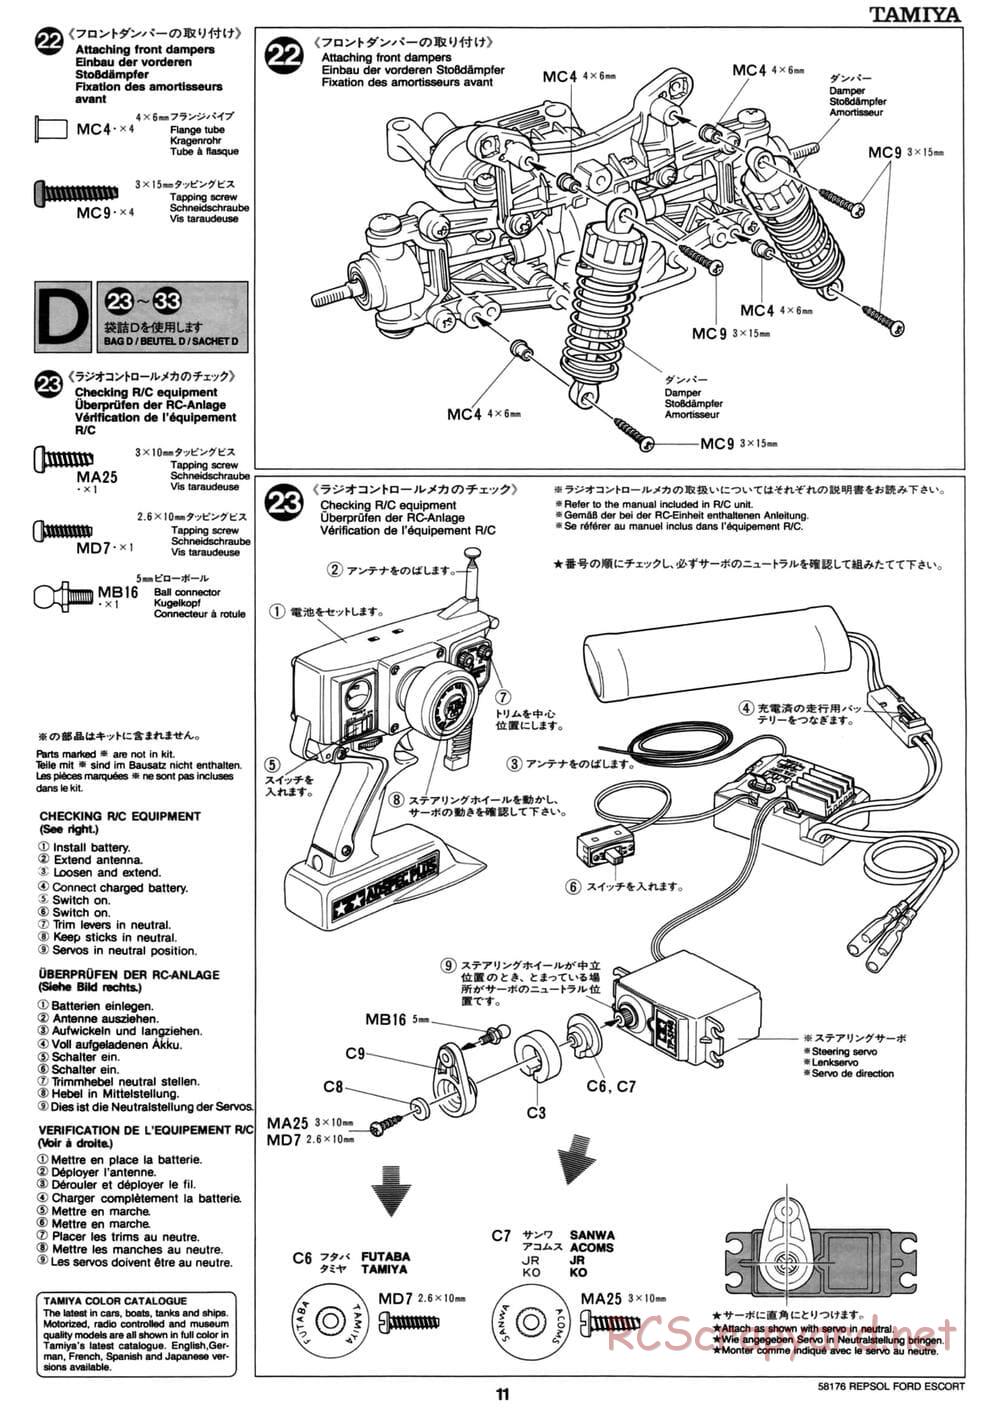 Tamiya - Repsol Ford Escort RS Cosworth - TA-02 Chassis - Manual - Page 11